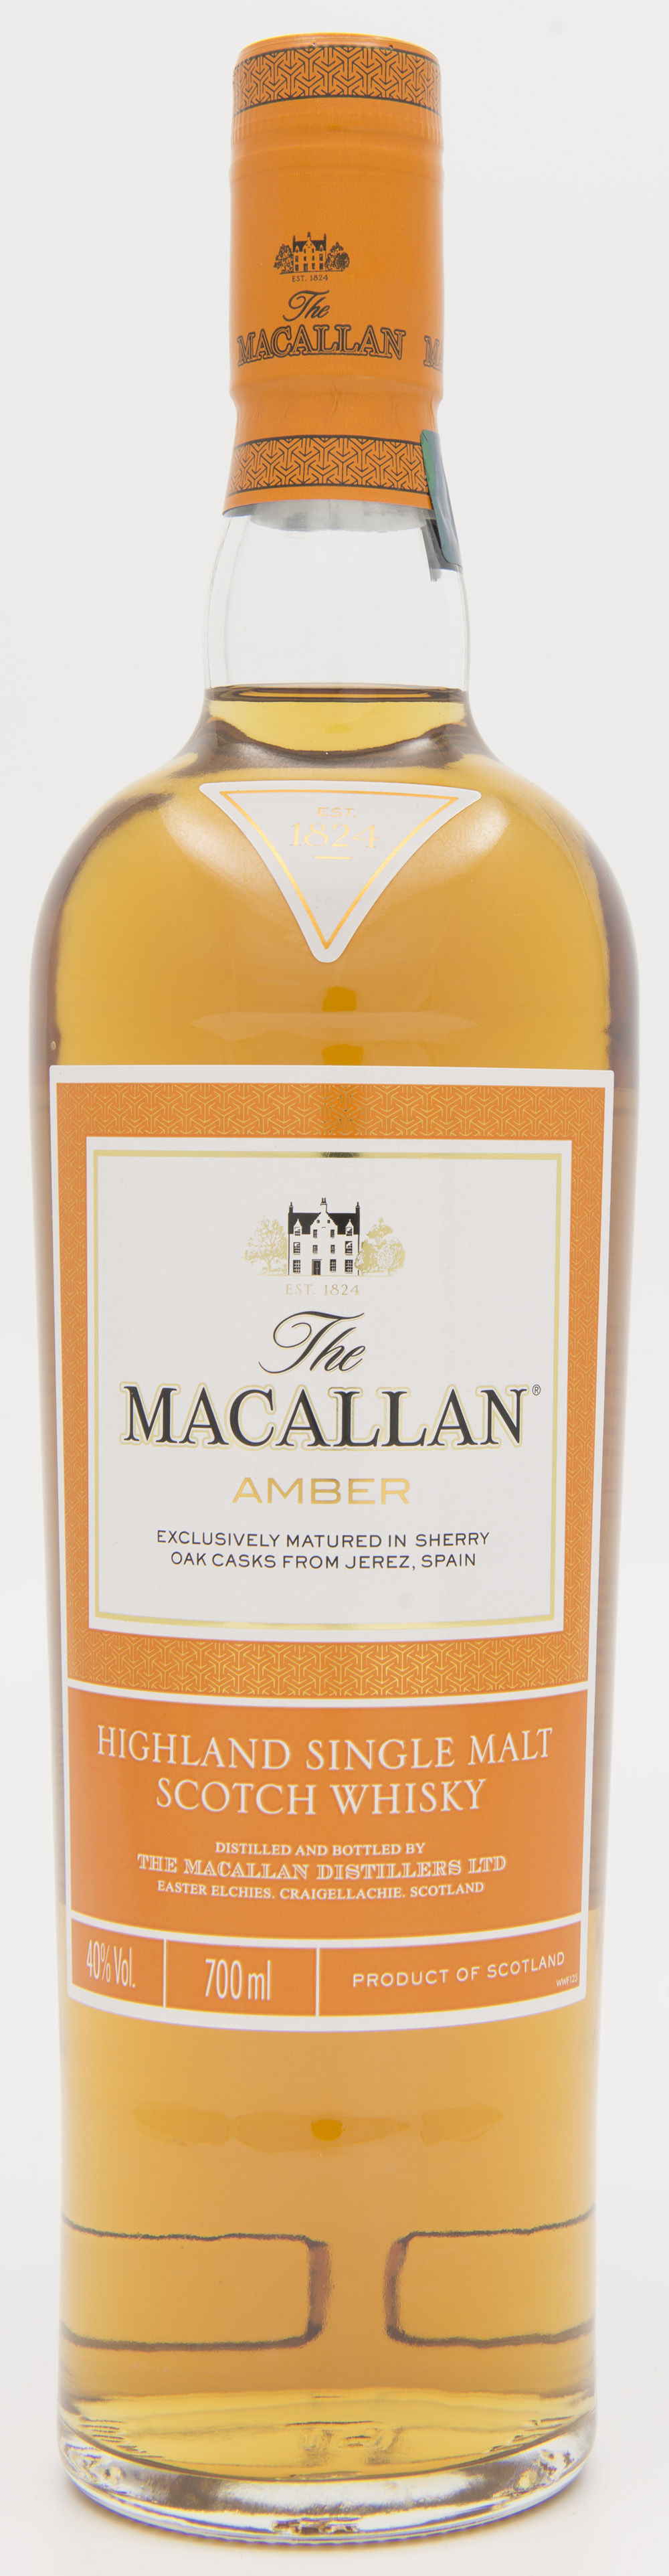 Billede: DSC_3585 The MacAllan Amber - bottle front.jpg